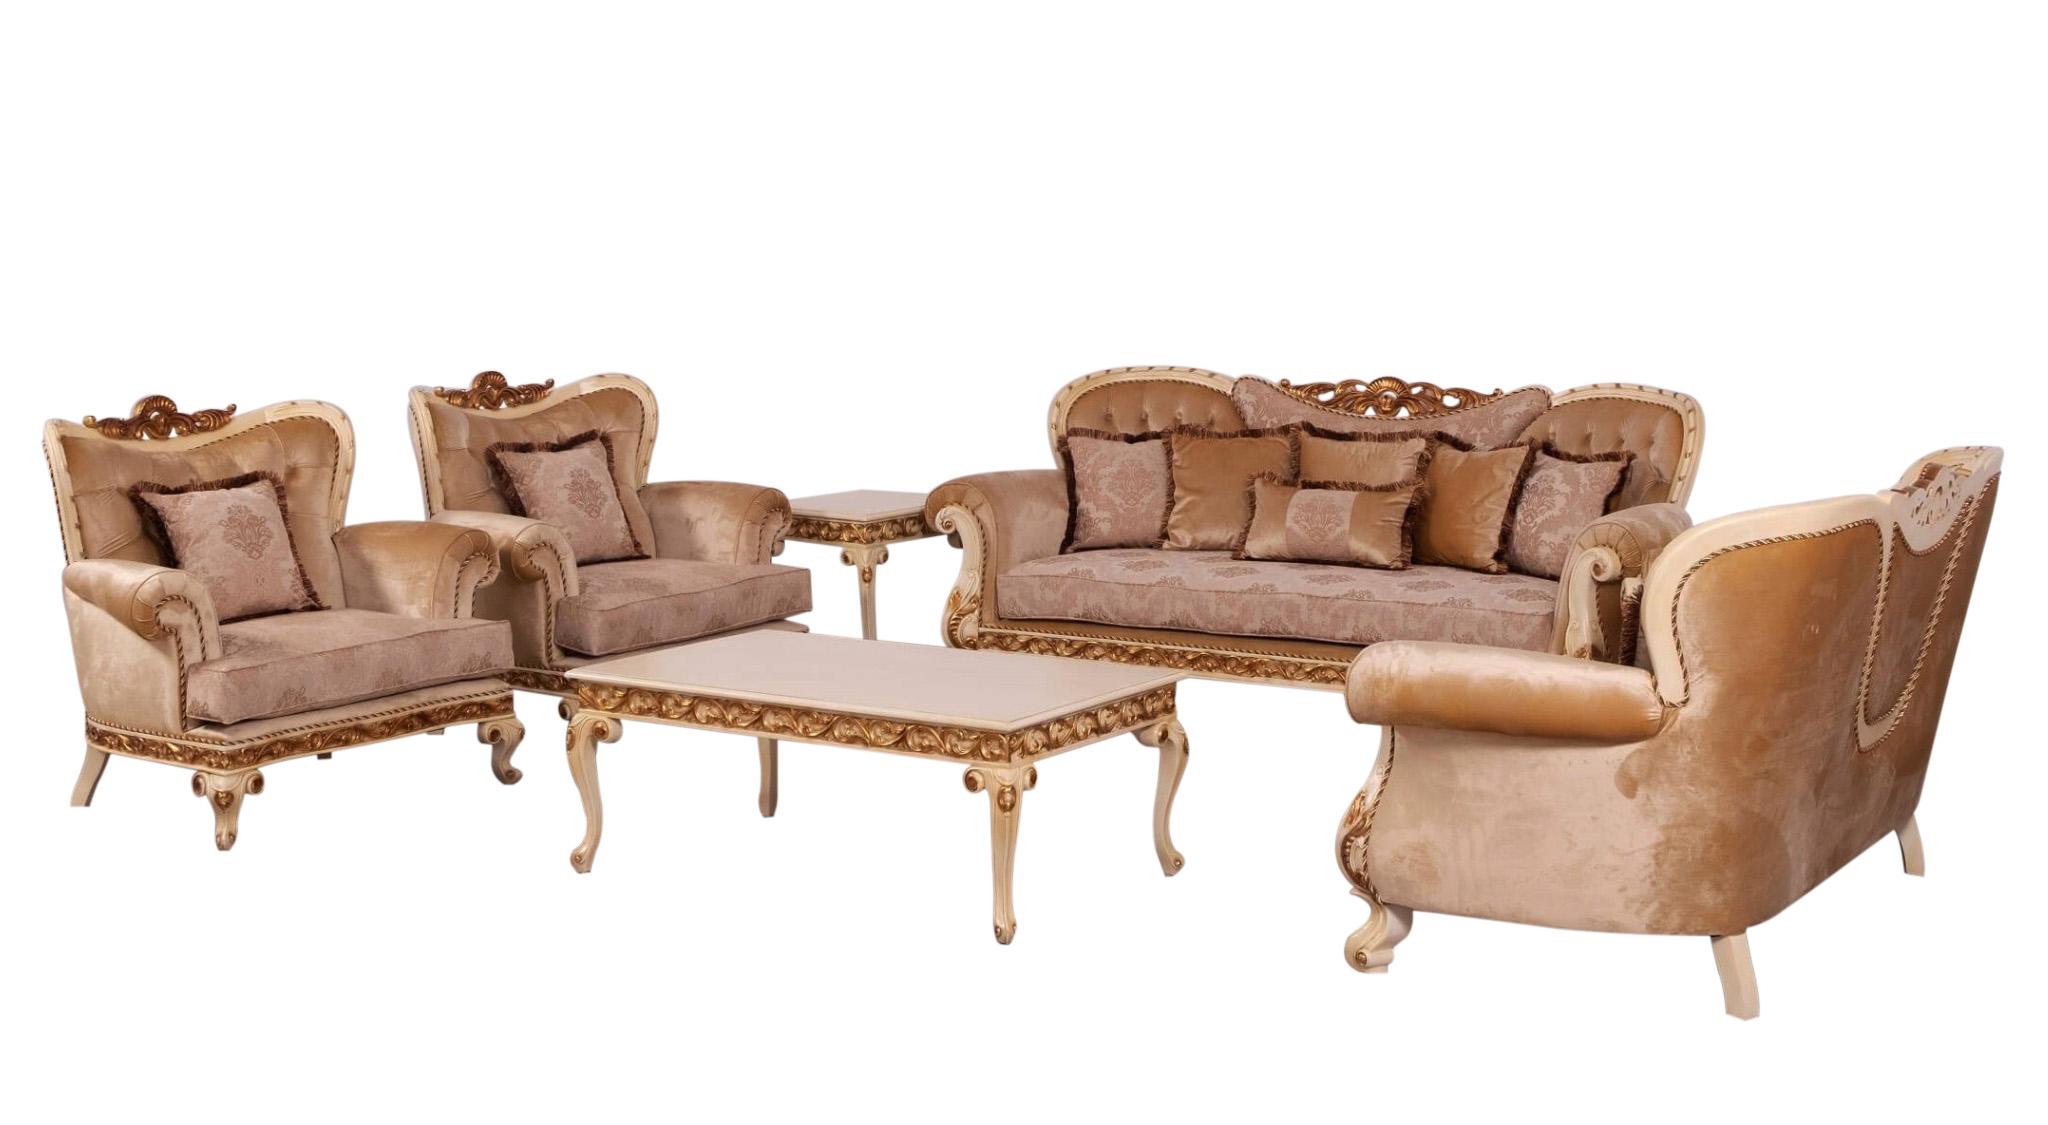 Classic, Traditional Sofa Set FANTASIA 40017-Set-4 in Sand, Gold, Beige Fabric